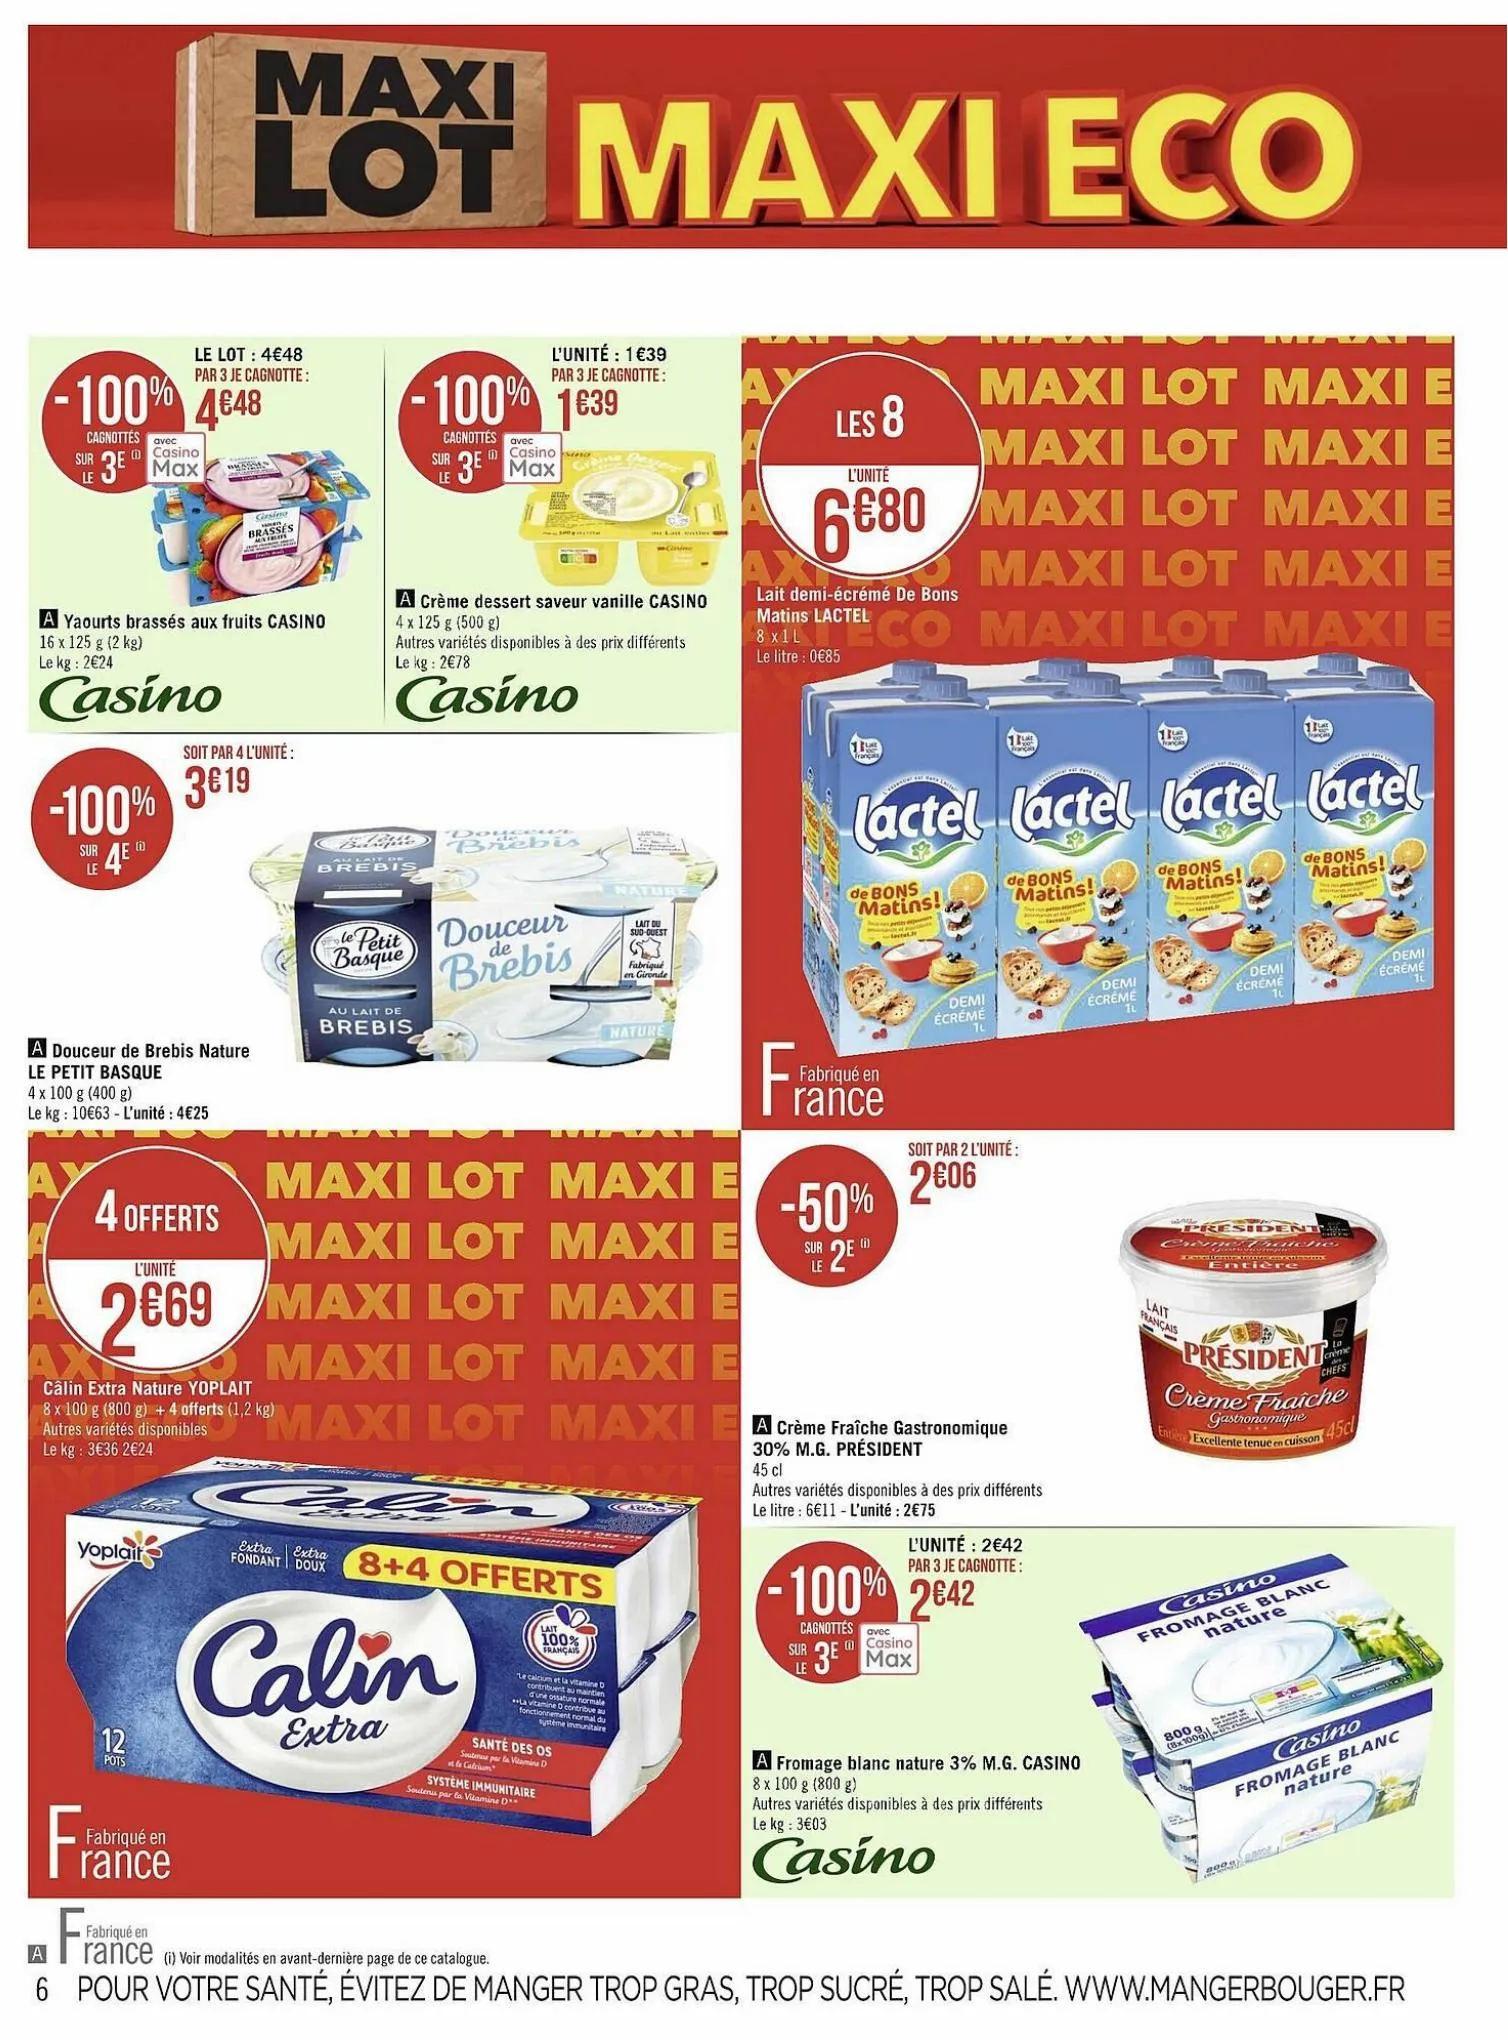 Catalogue Maxi Lot Maxi Eco, page 00006